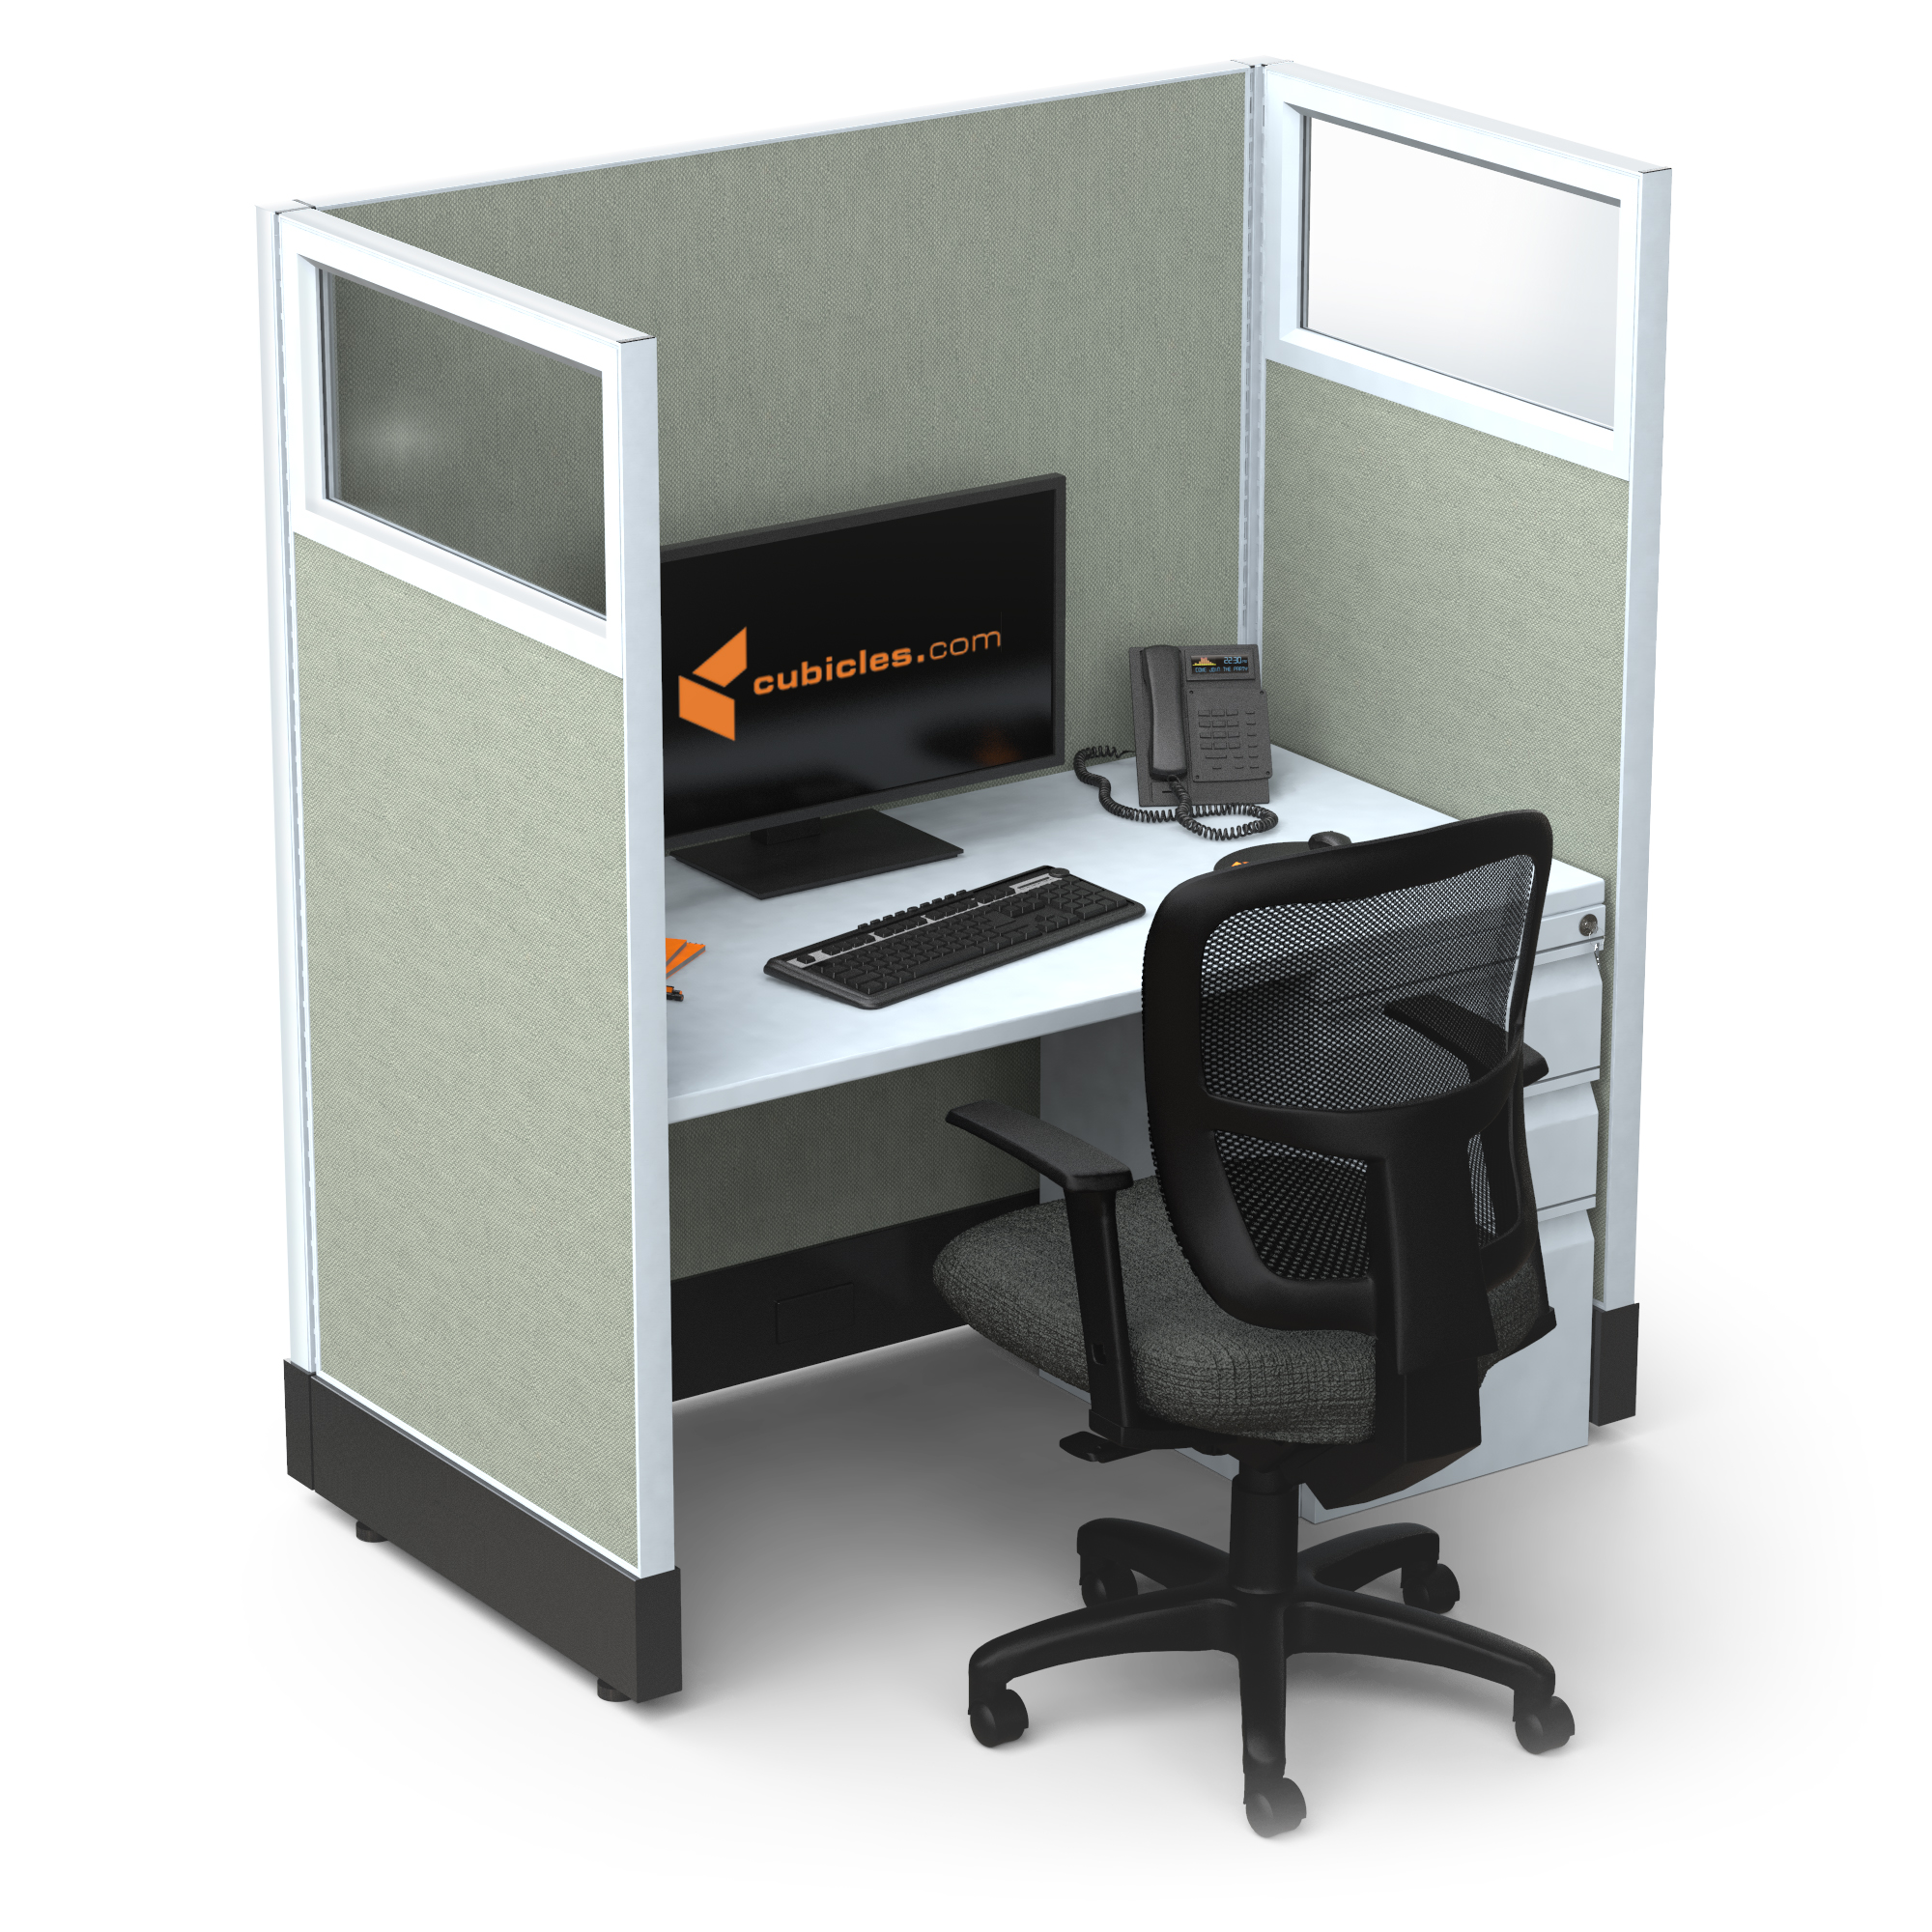 Hot desking cubicle workstations 1single powered